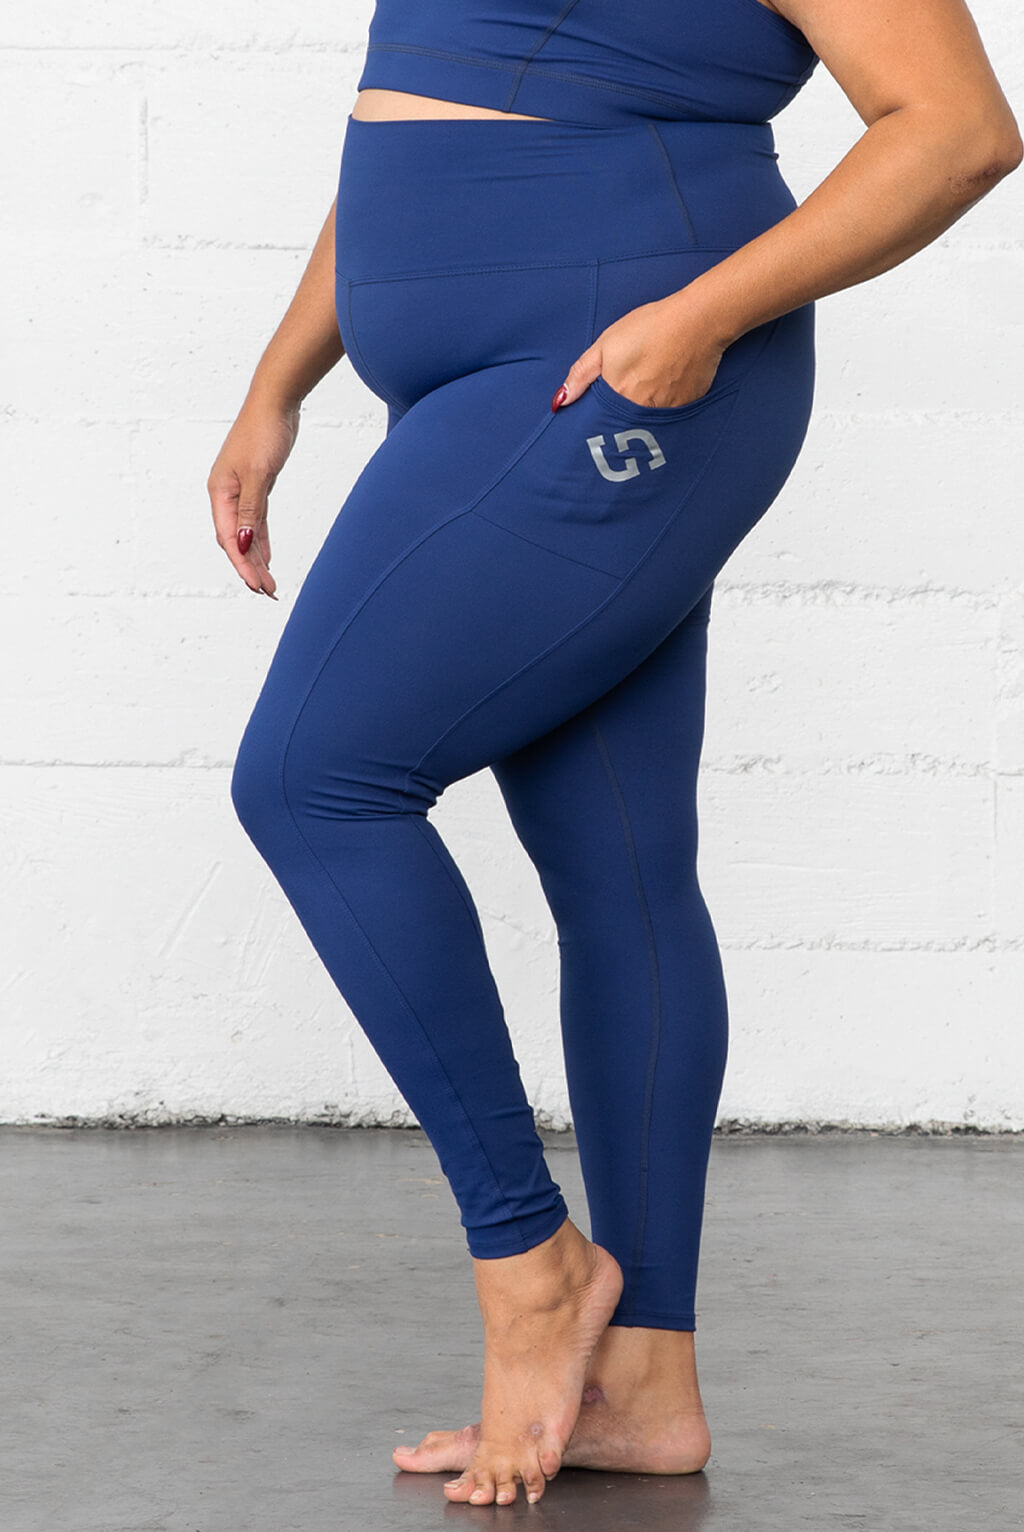 Buy PGS Women Blue SuperSoft Cotton Lycra Pocket legging- XL